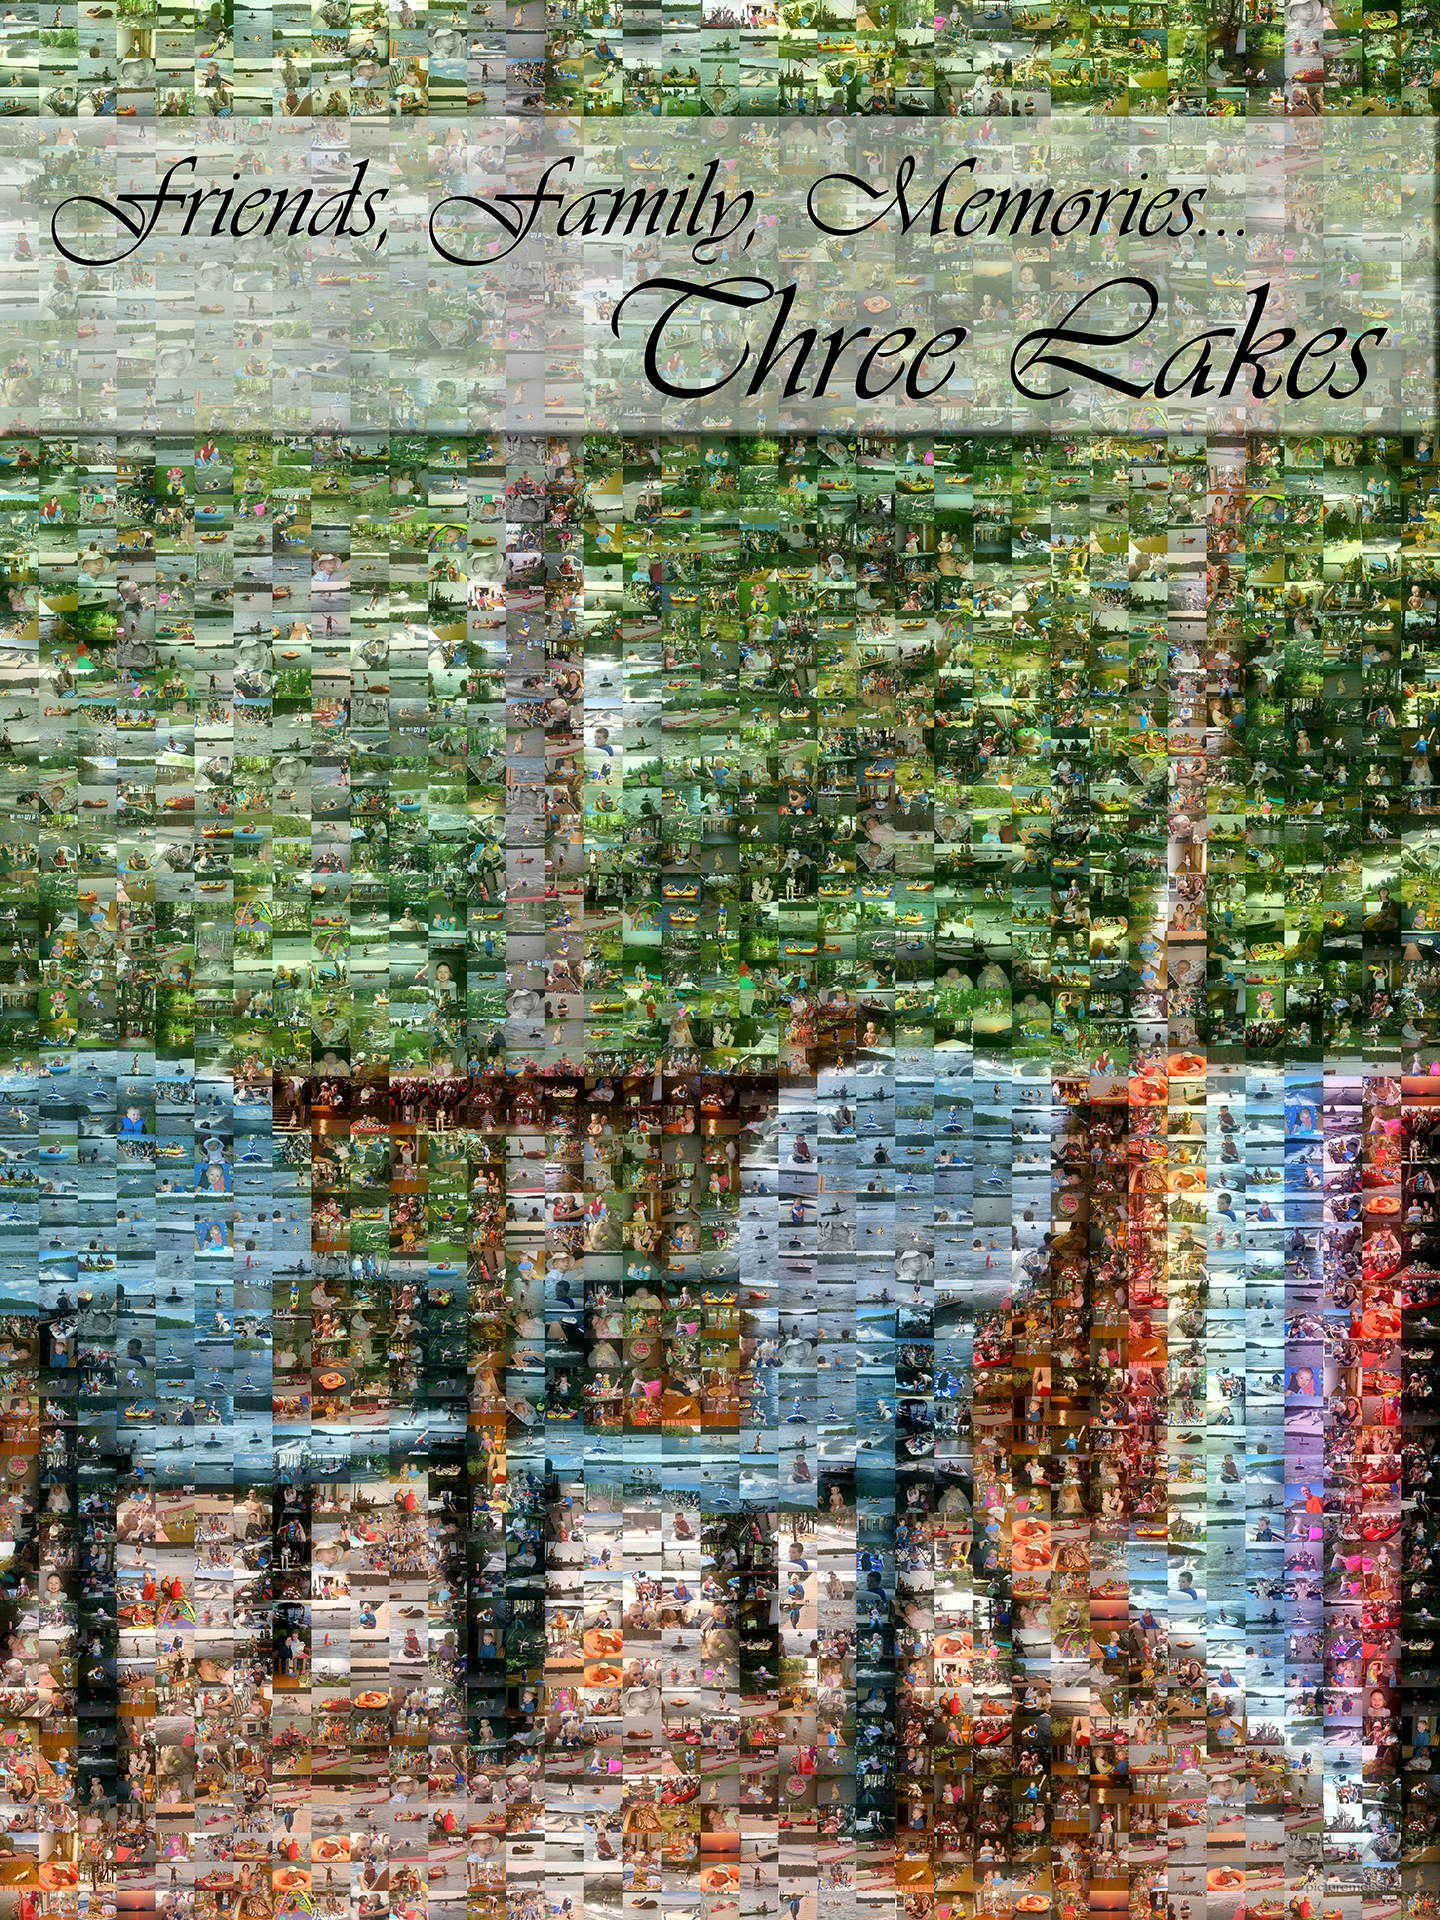 photo mosaic created using 852 vacation photos